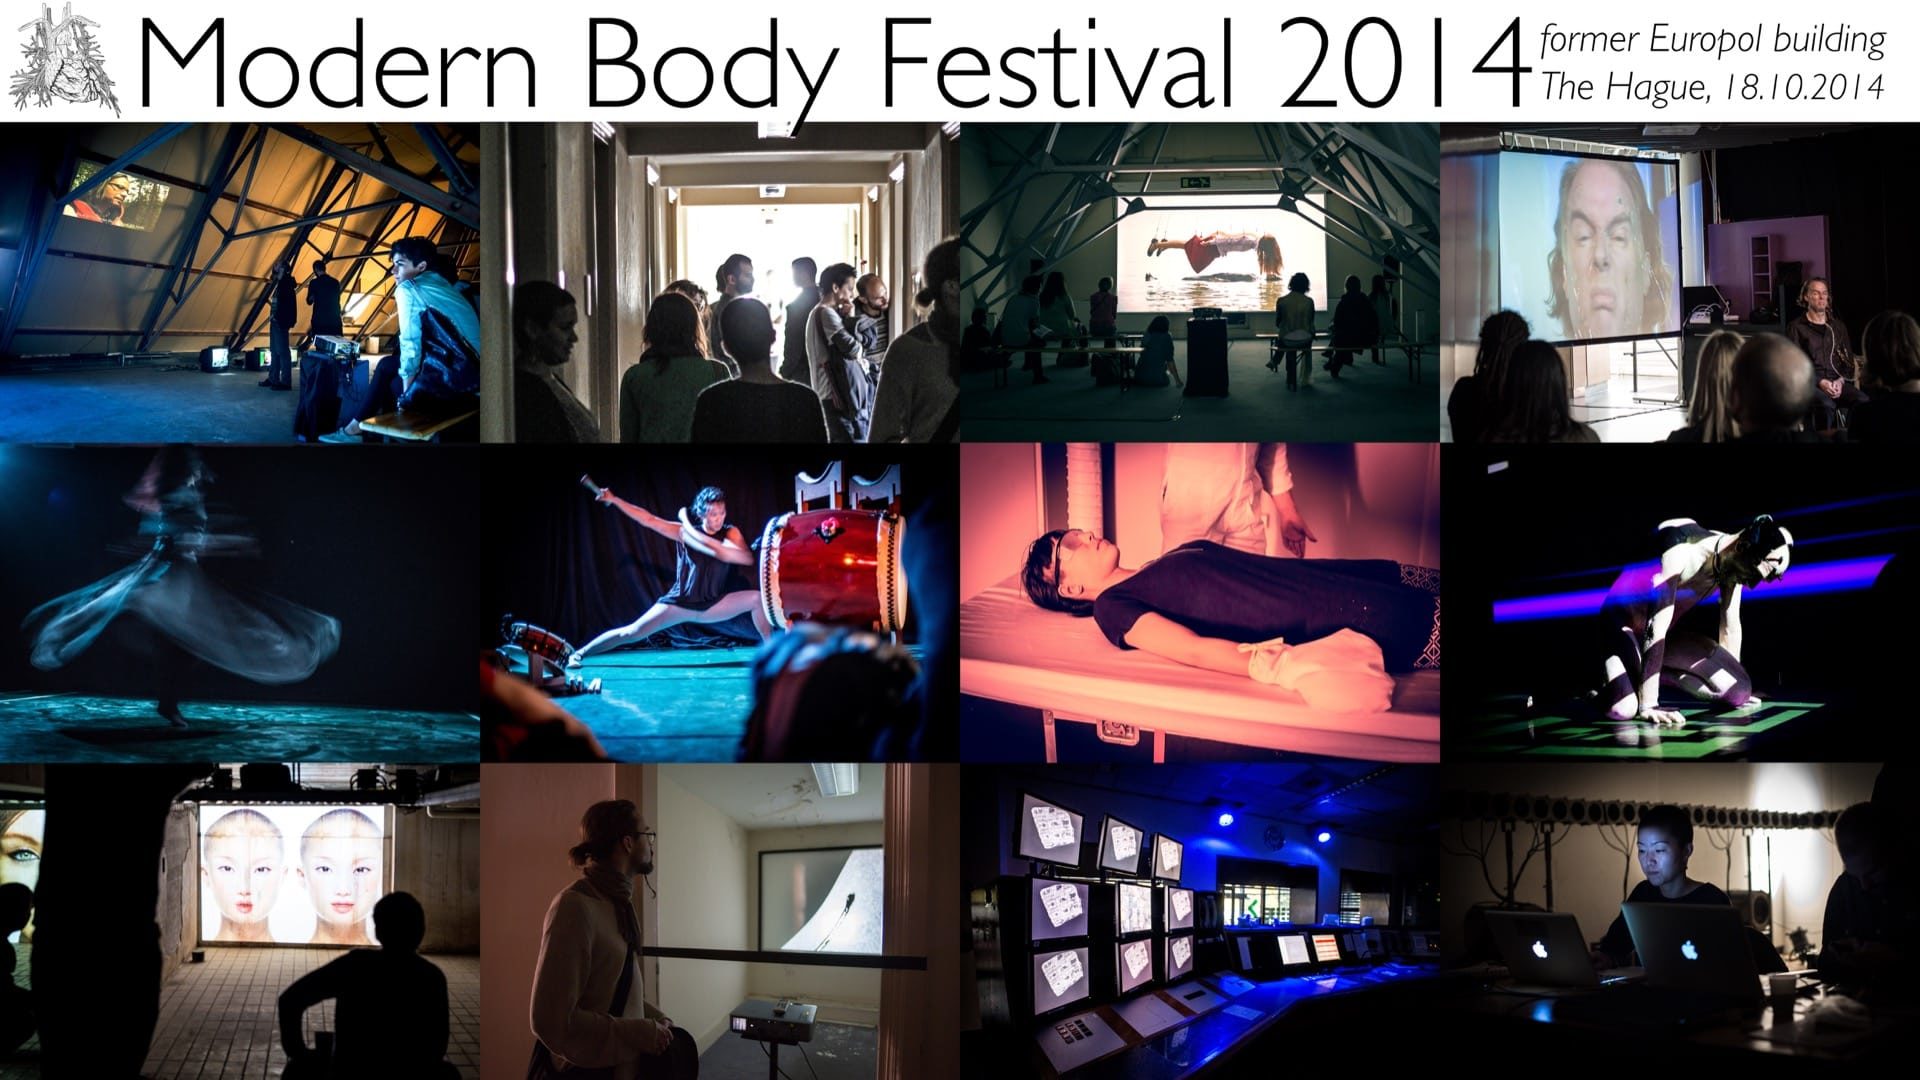 Modern Body Festival 2014: Art as research through experience